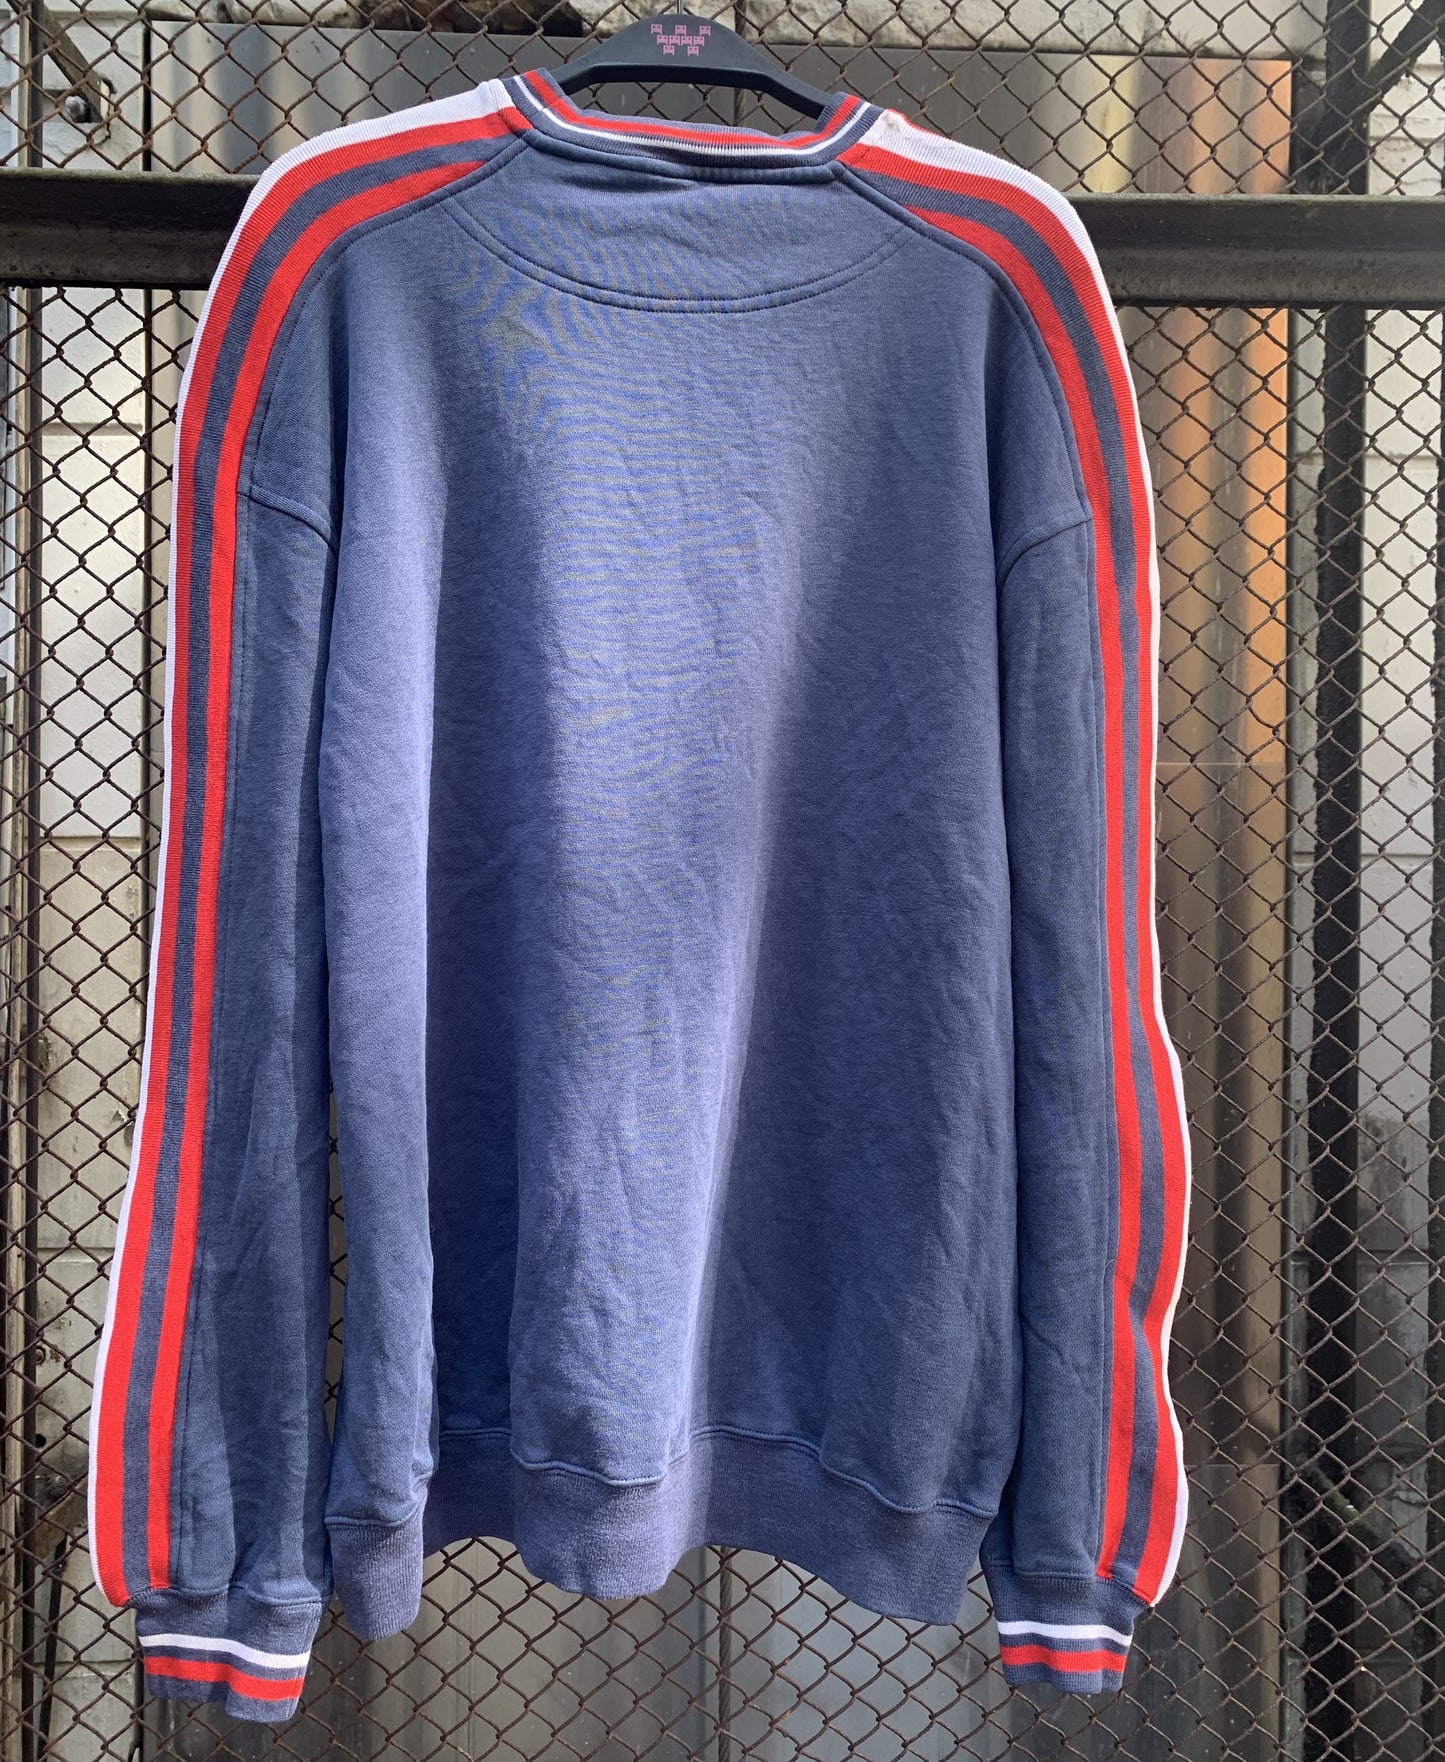 Nascar 24 Sweatshirt - Gordon